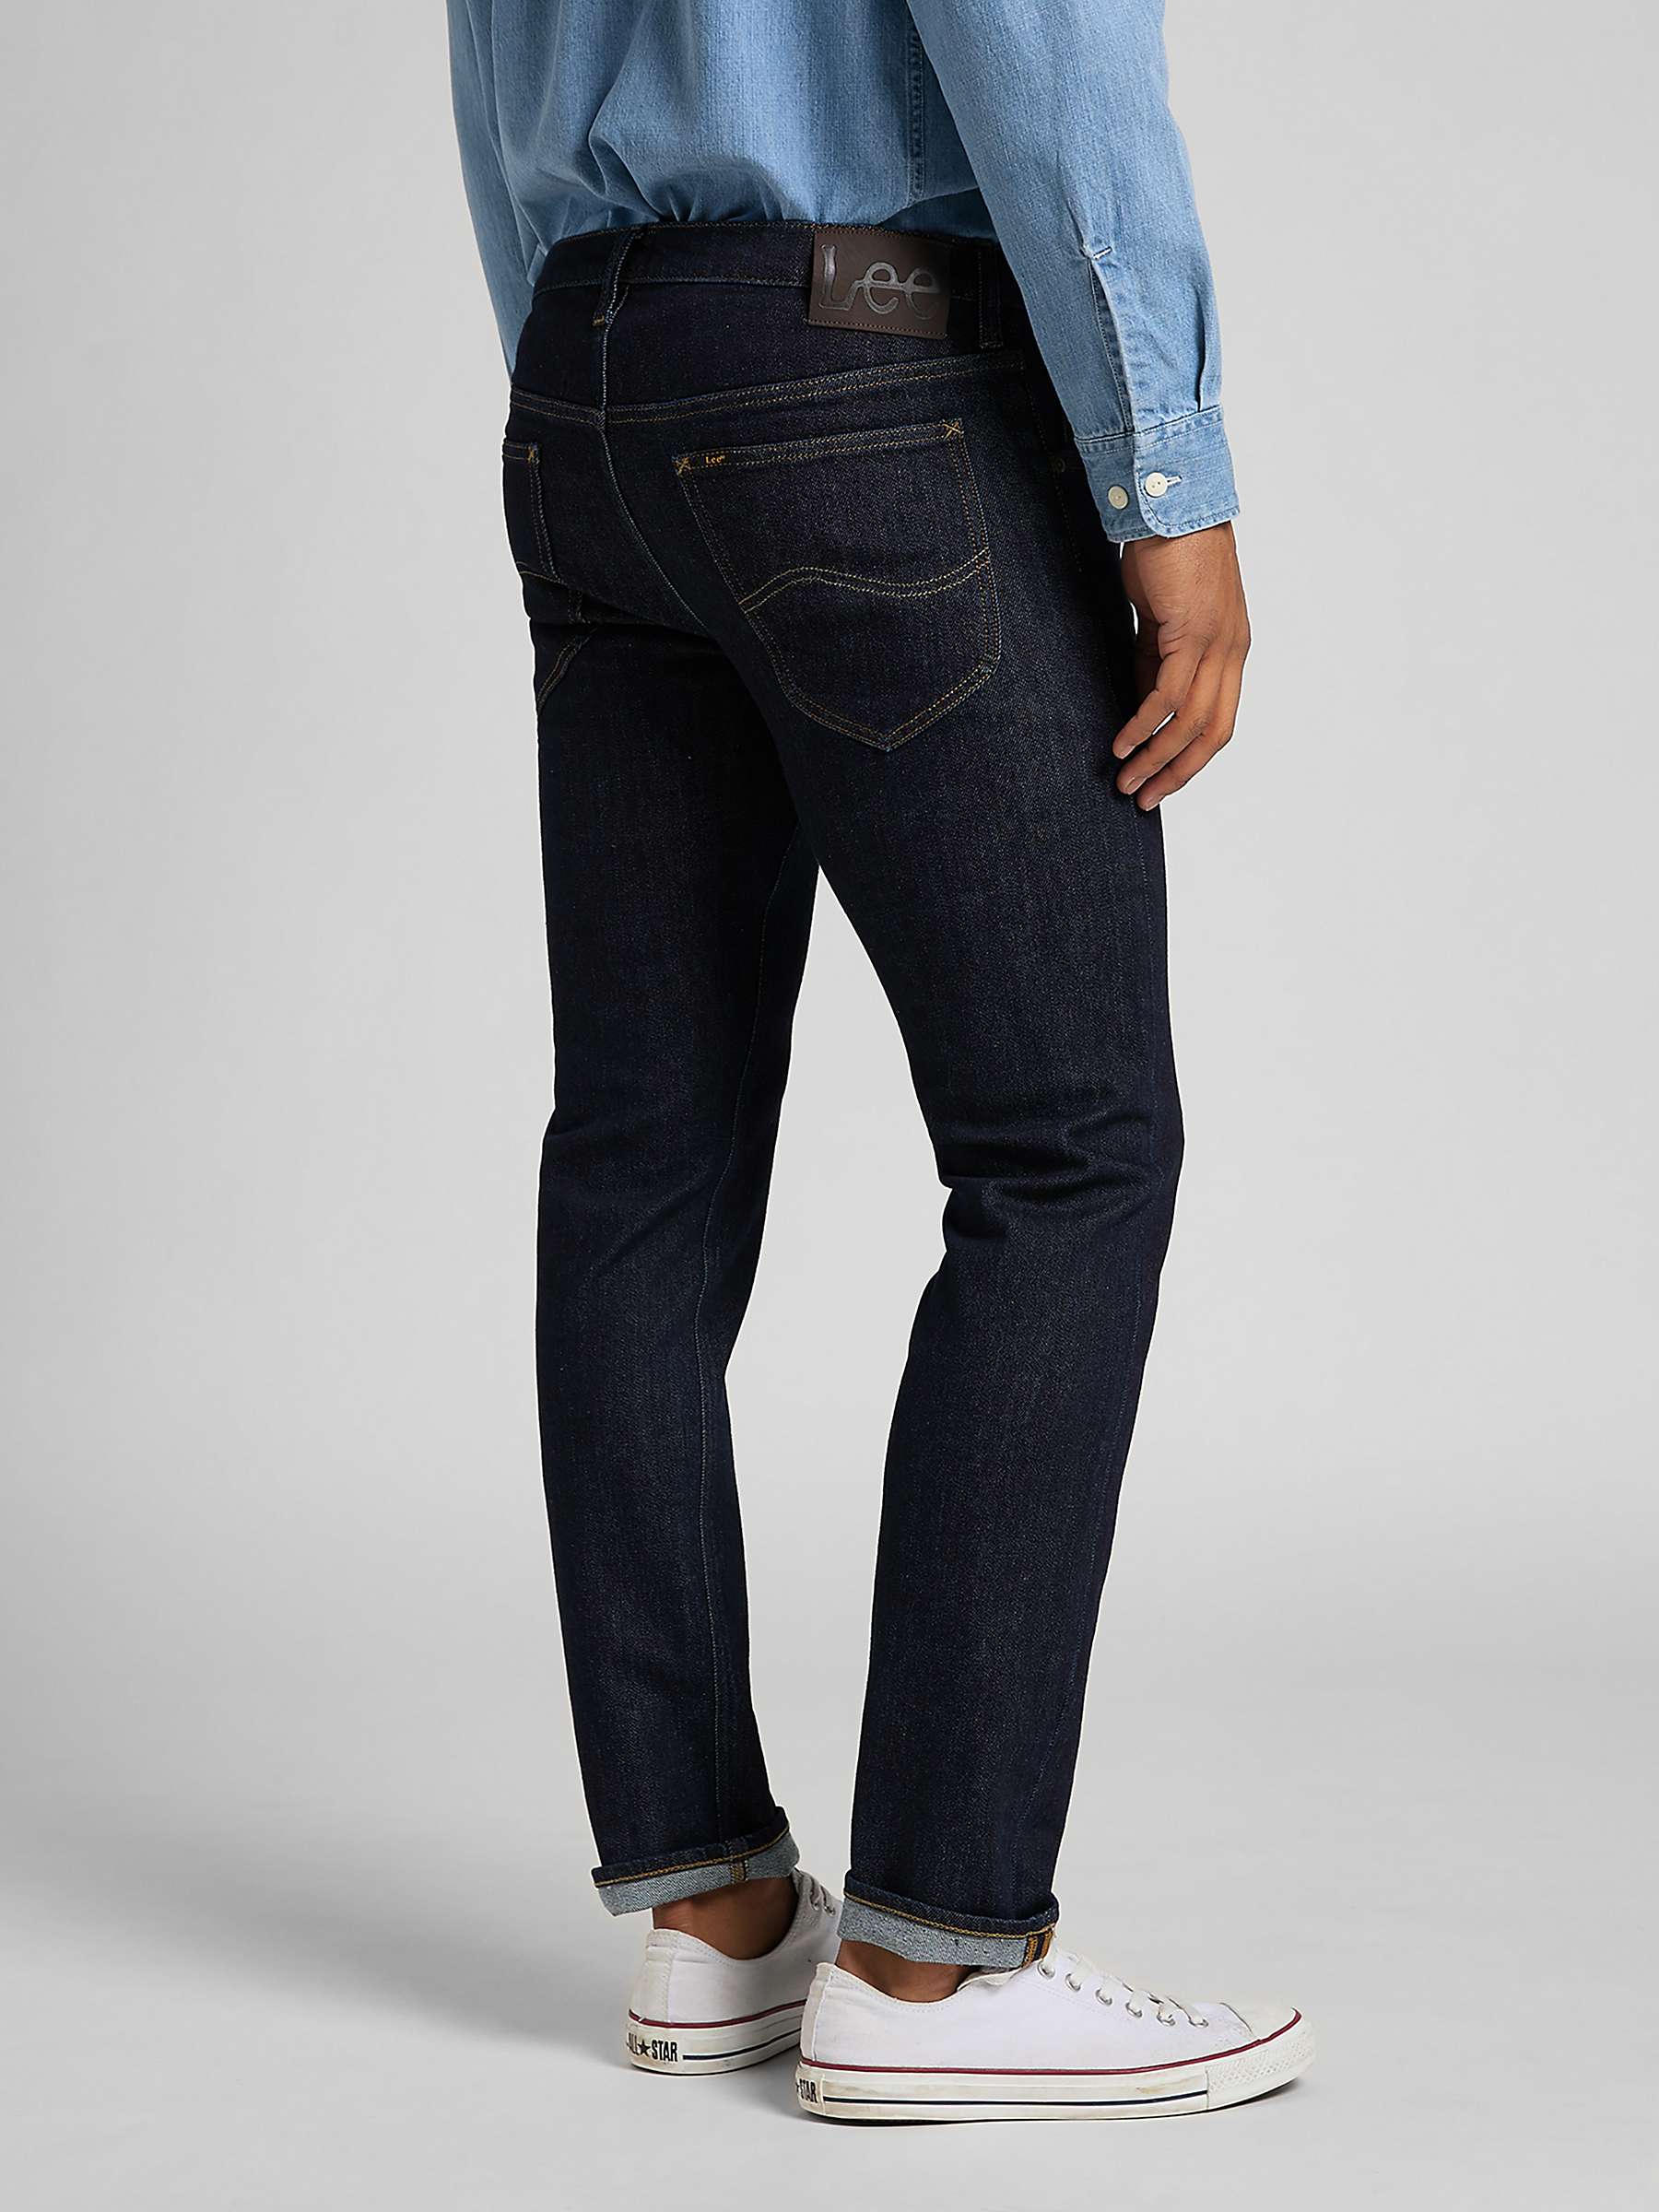 Lee Daren Straight Leg Dark Rinse Denim Jeans, Blue at John Lewis & Partners